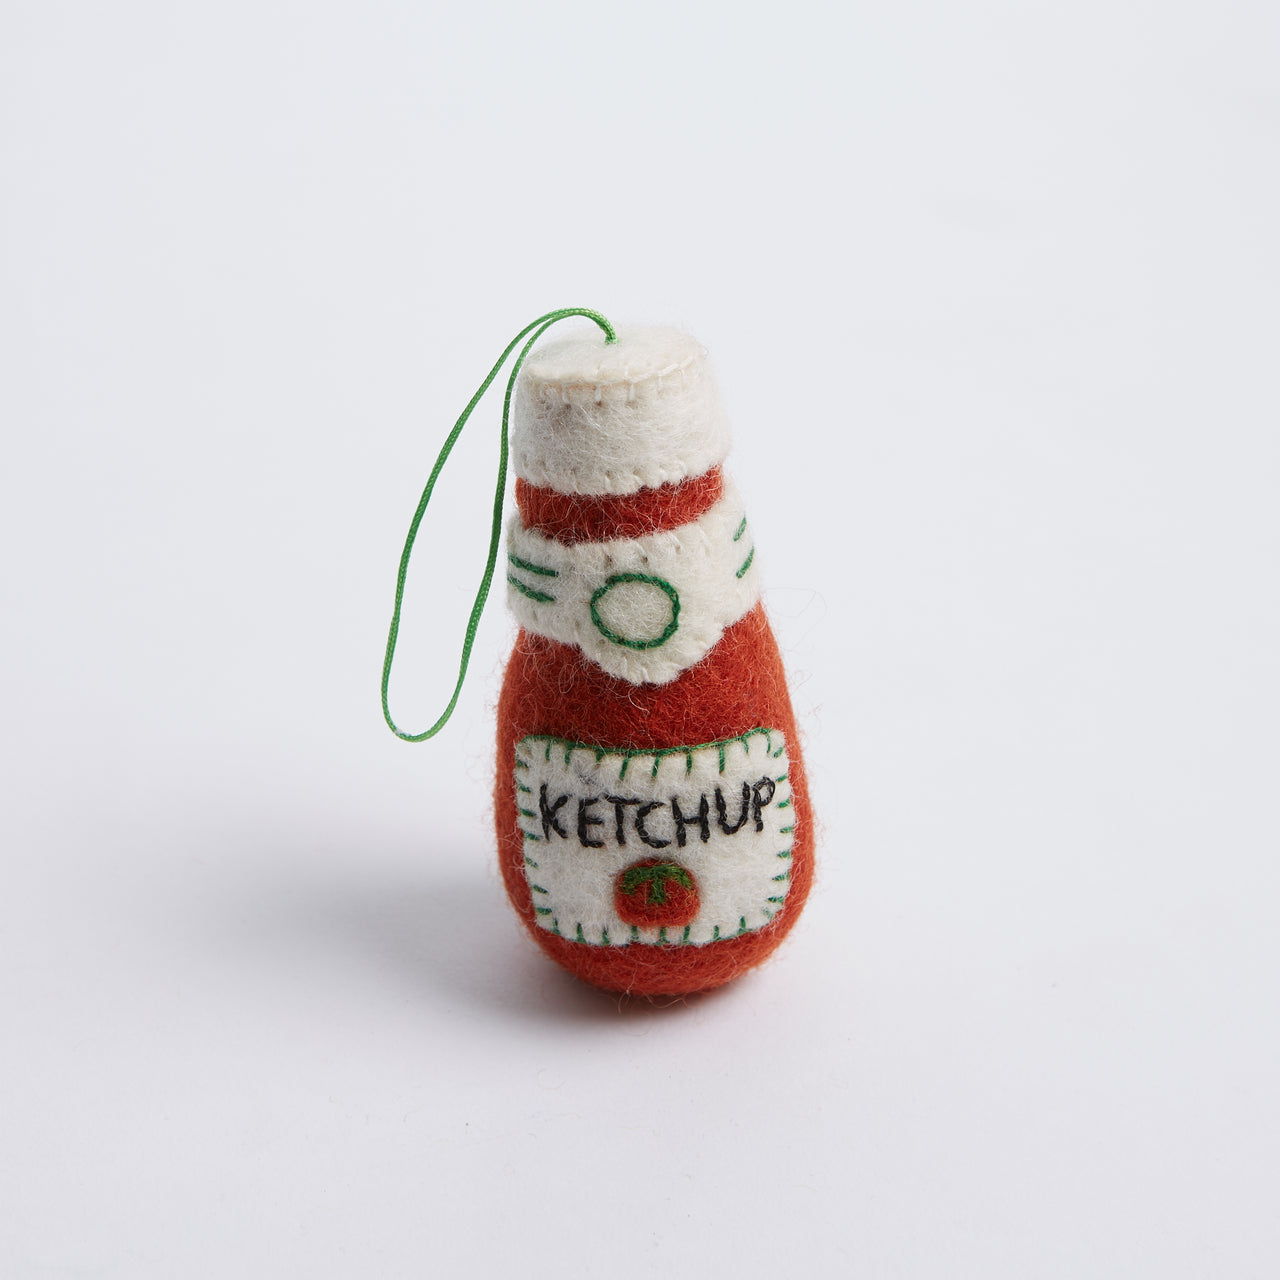 Drake General Store - Felt Ornament - Ketchup Bottle